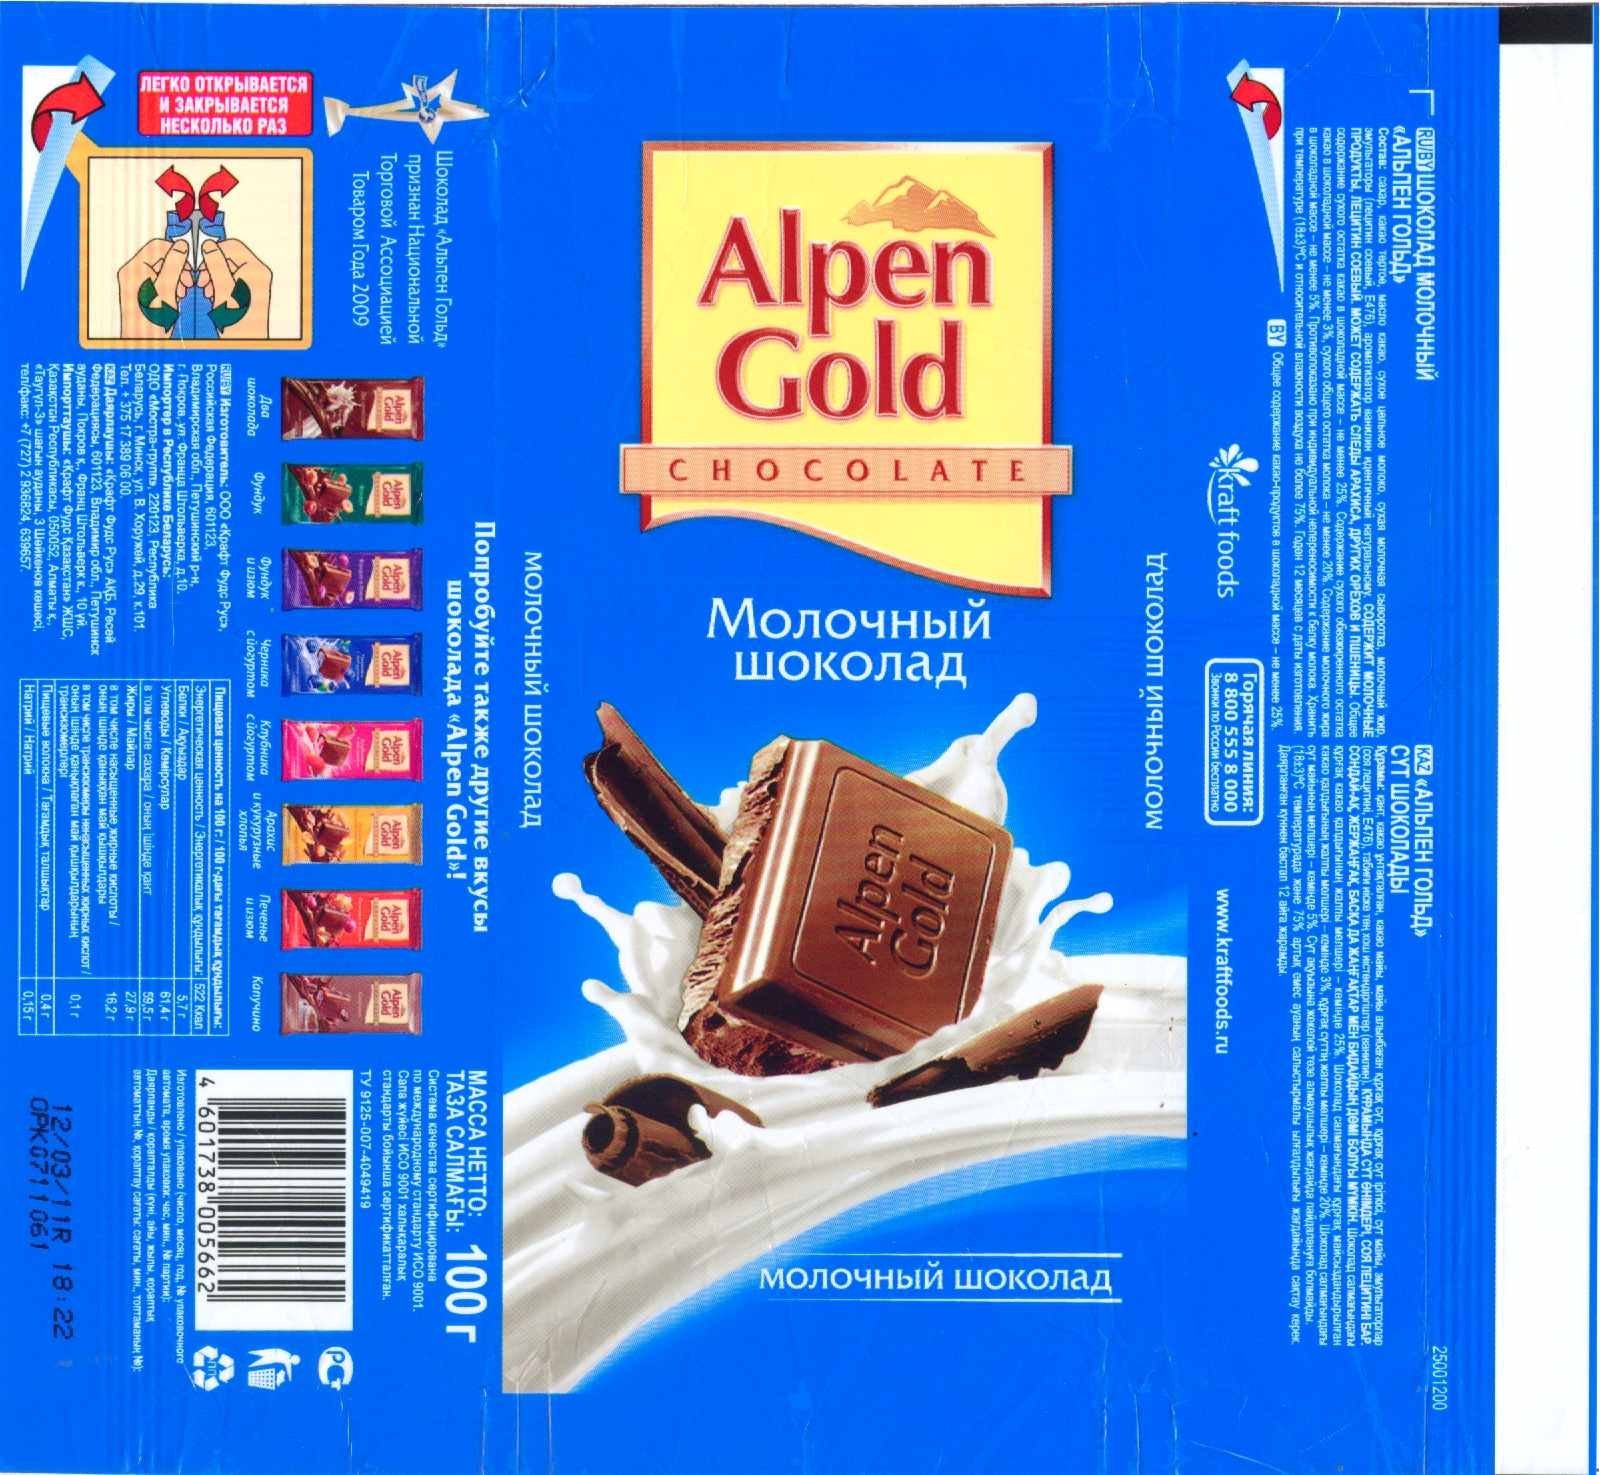 Плитка шоколада масса. Шоколад Альпен Гольд масса. Масса шоколадки Альпен Гольд. Шоколад Альпен Гольд 1990 упаковка. Шоколад Альпен Гольд 1990.